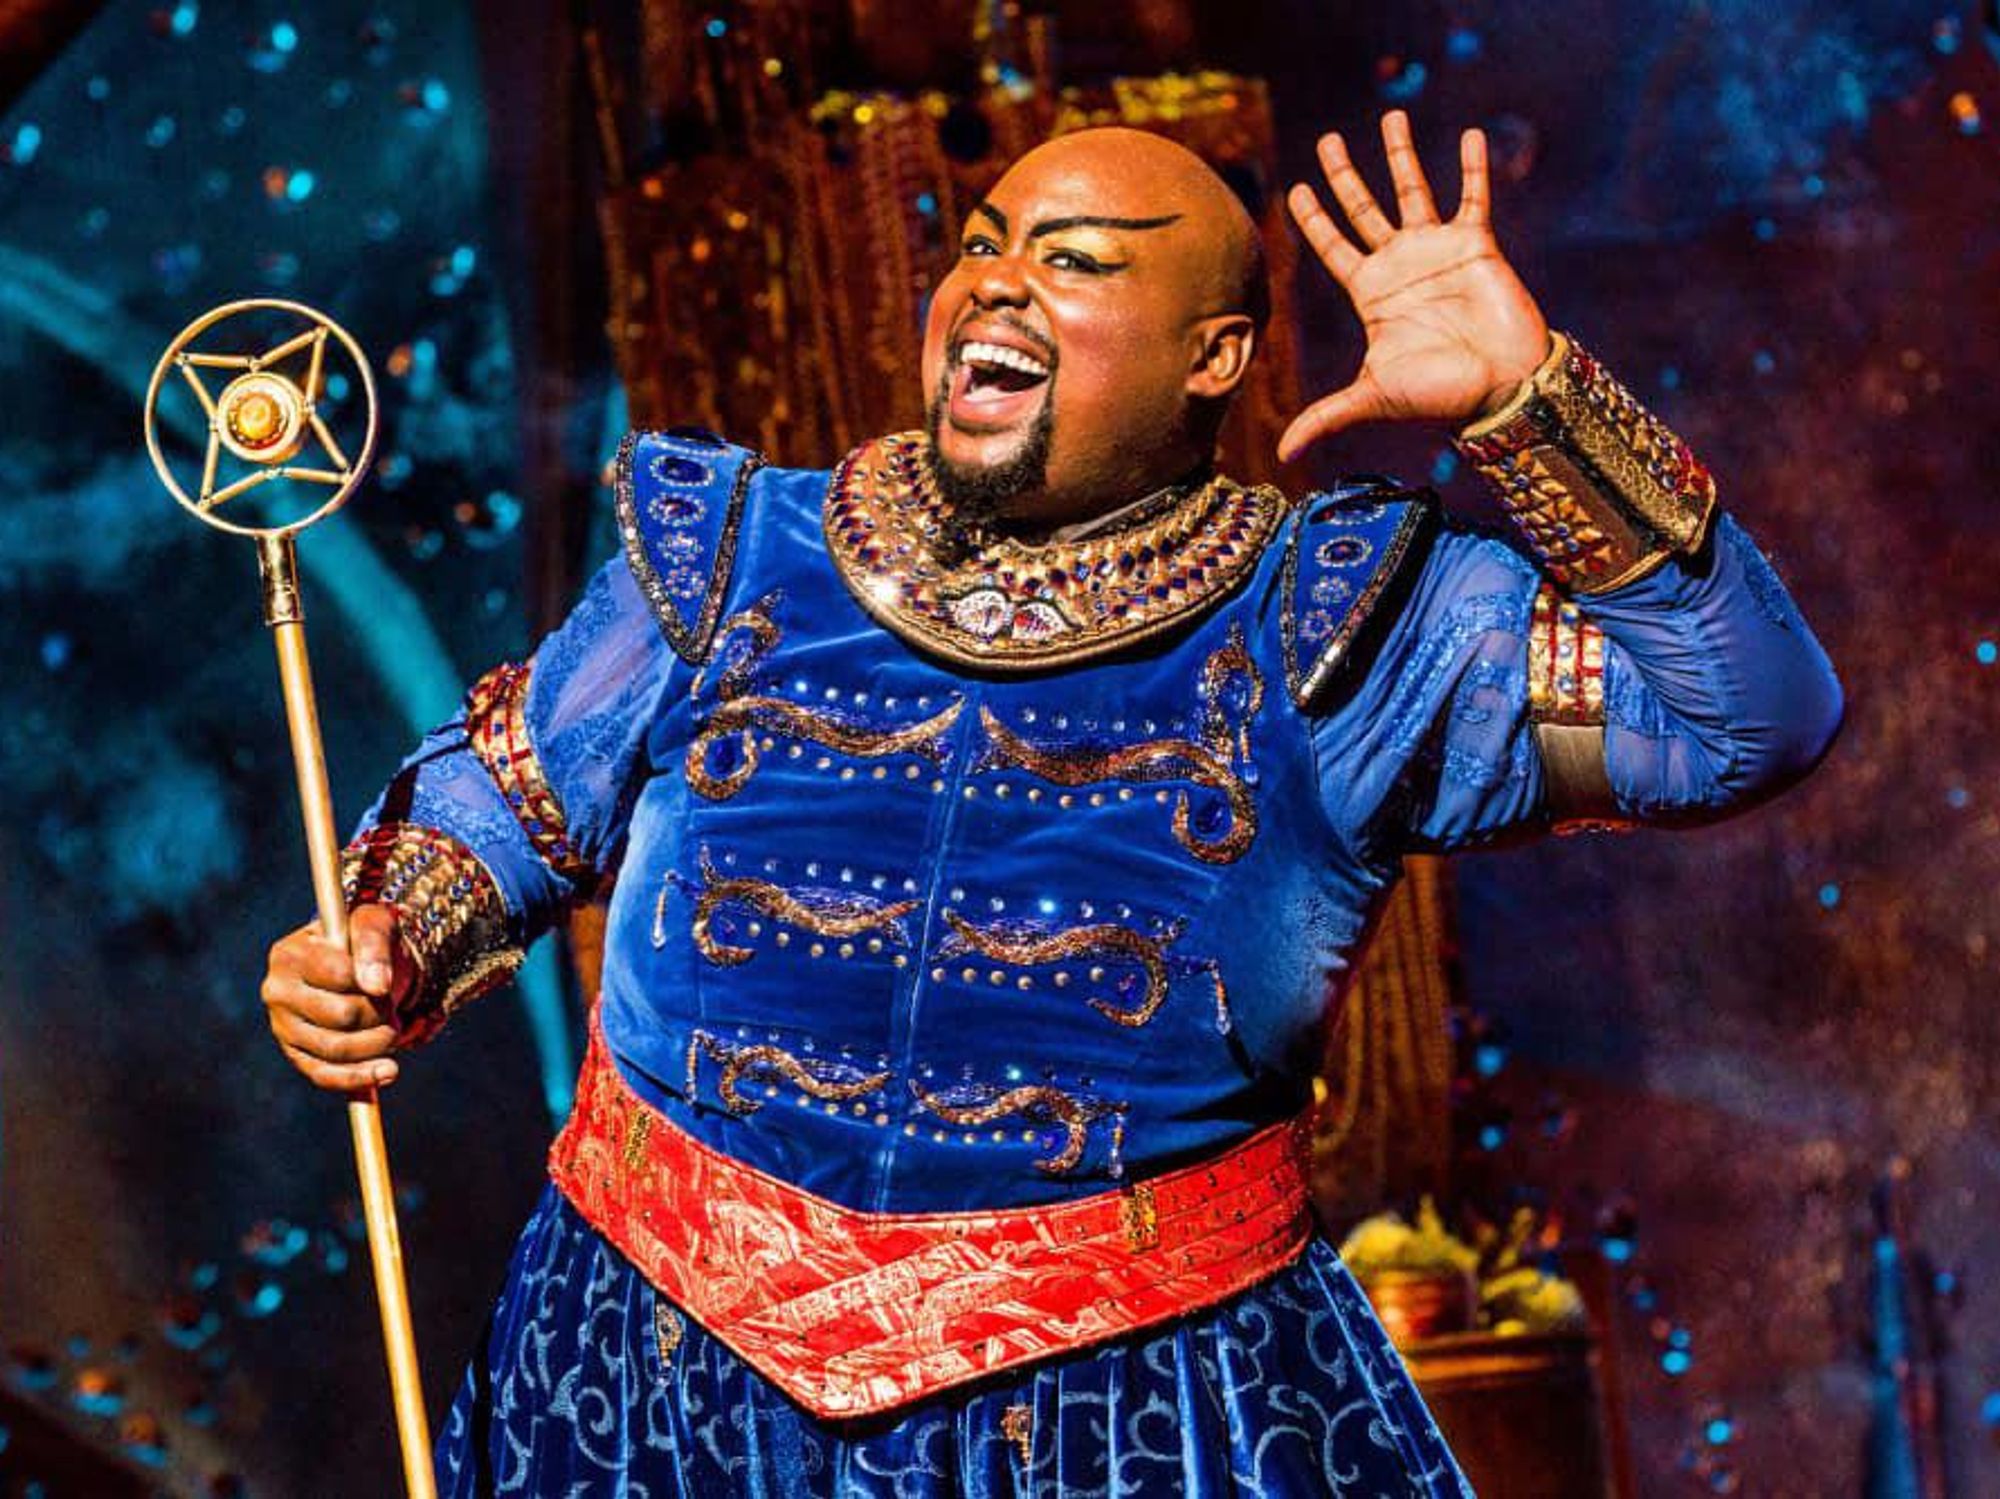 Major Attaway in Aladdin on Broadway